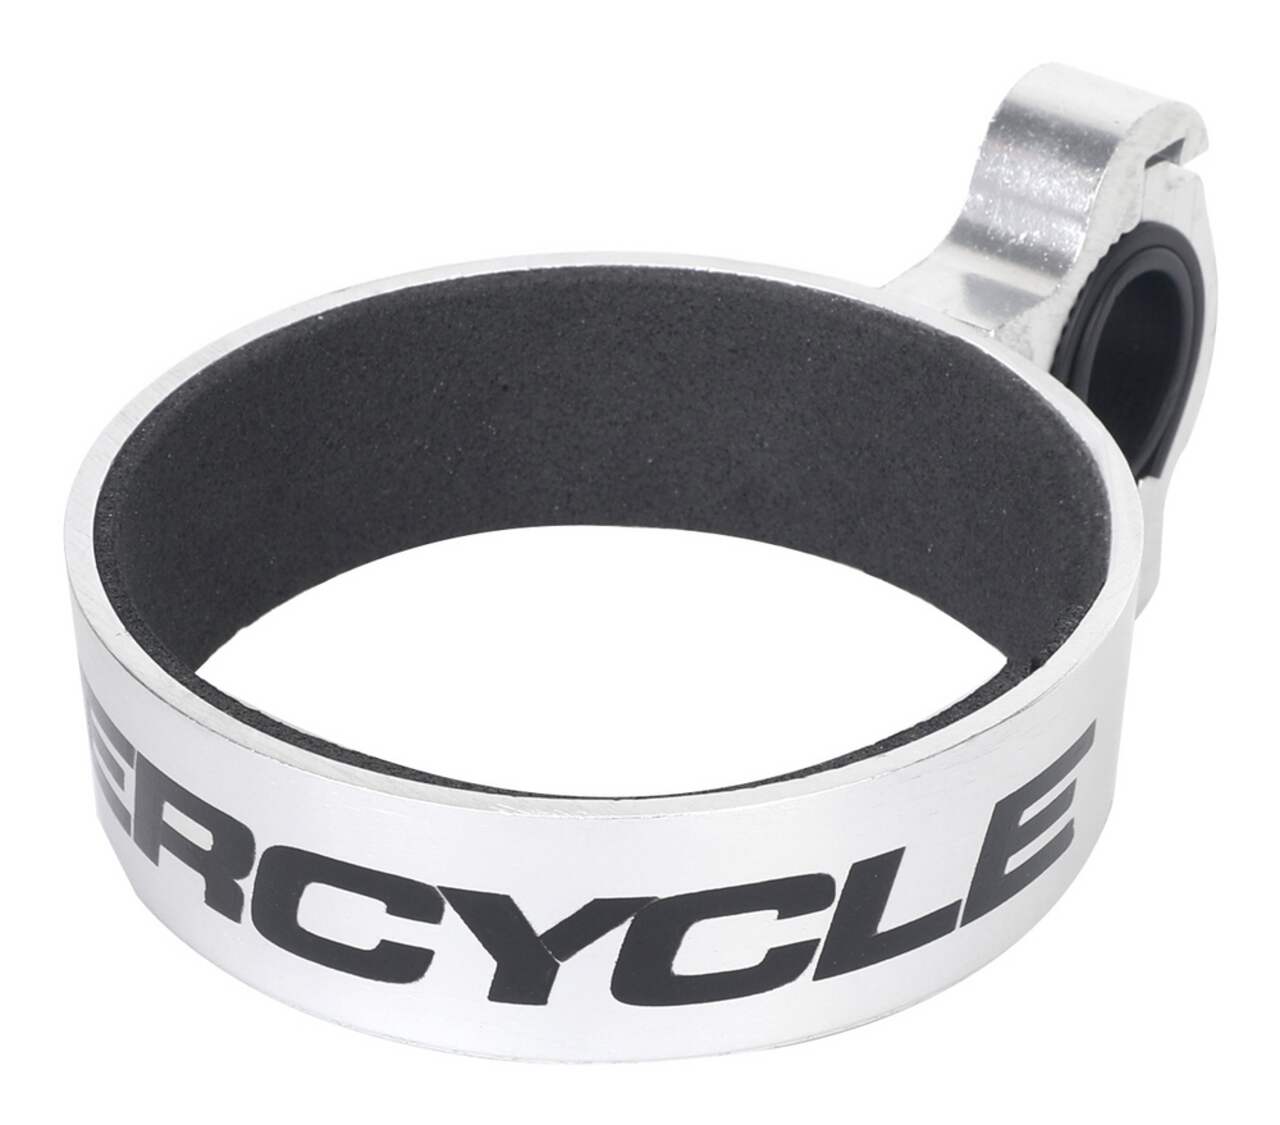 Porte-gobelet/bouteille pour vélo Supercycle Traveler en aluminium